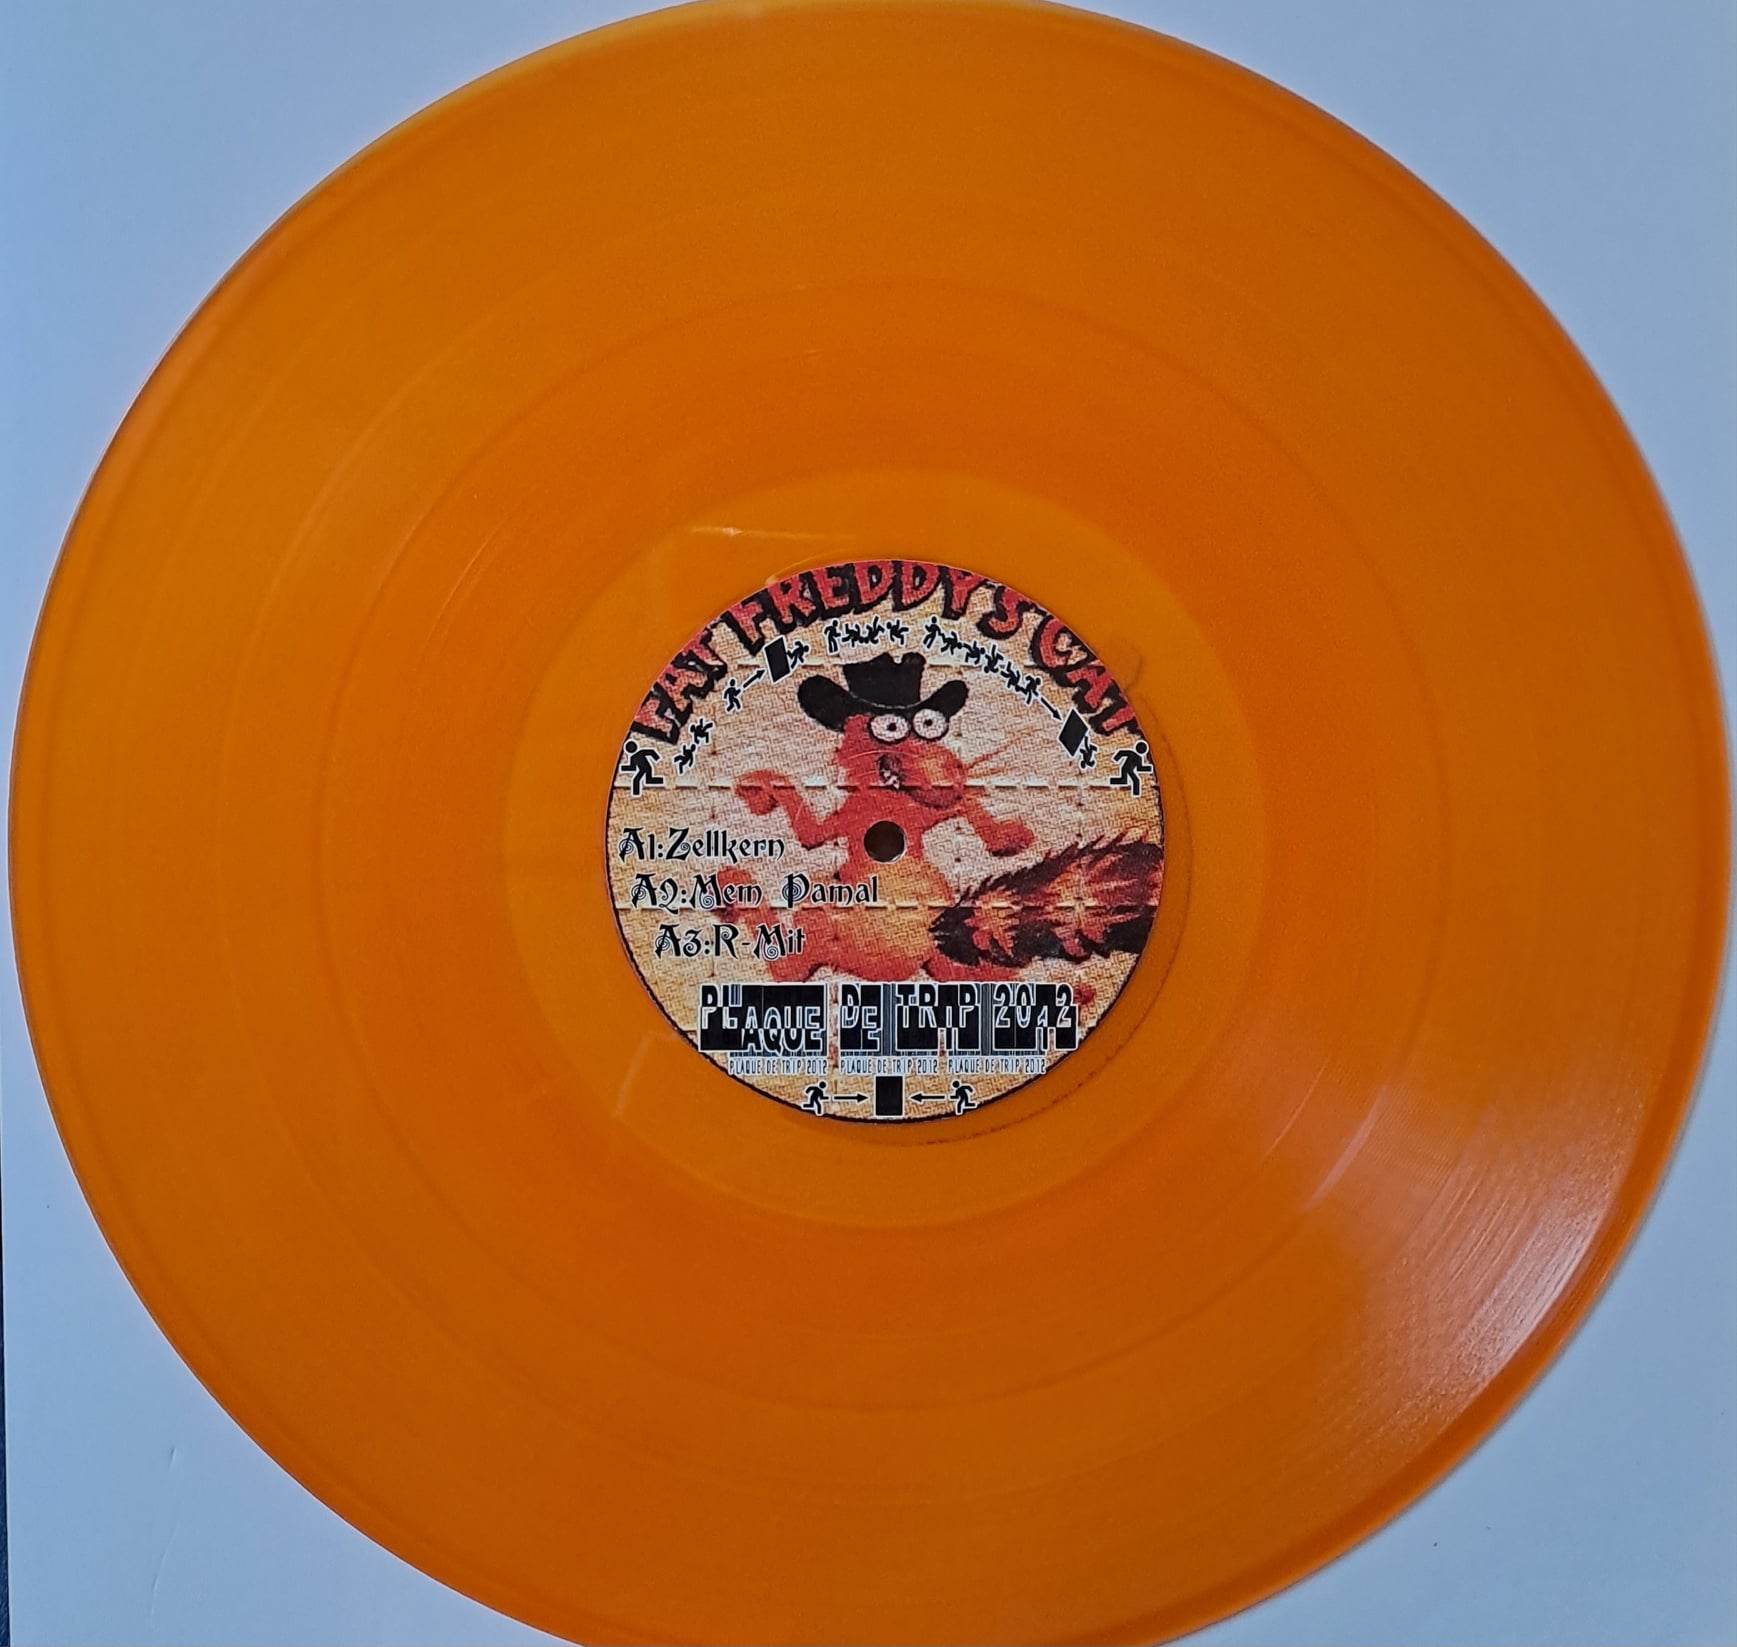 Plaque De Trip 2012 (orange) - vinyle freetekno